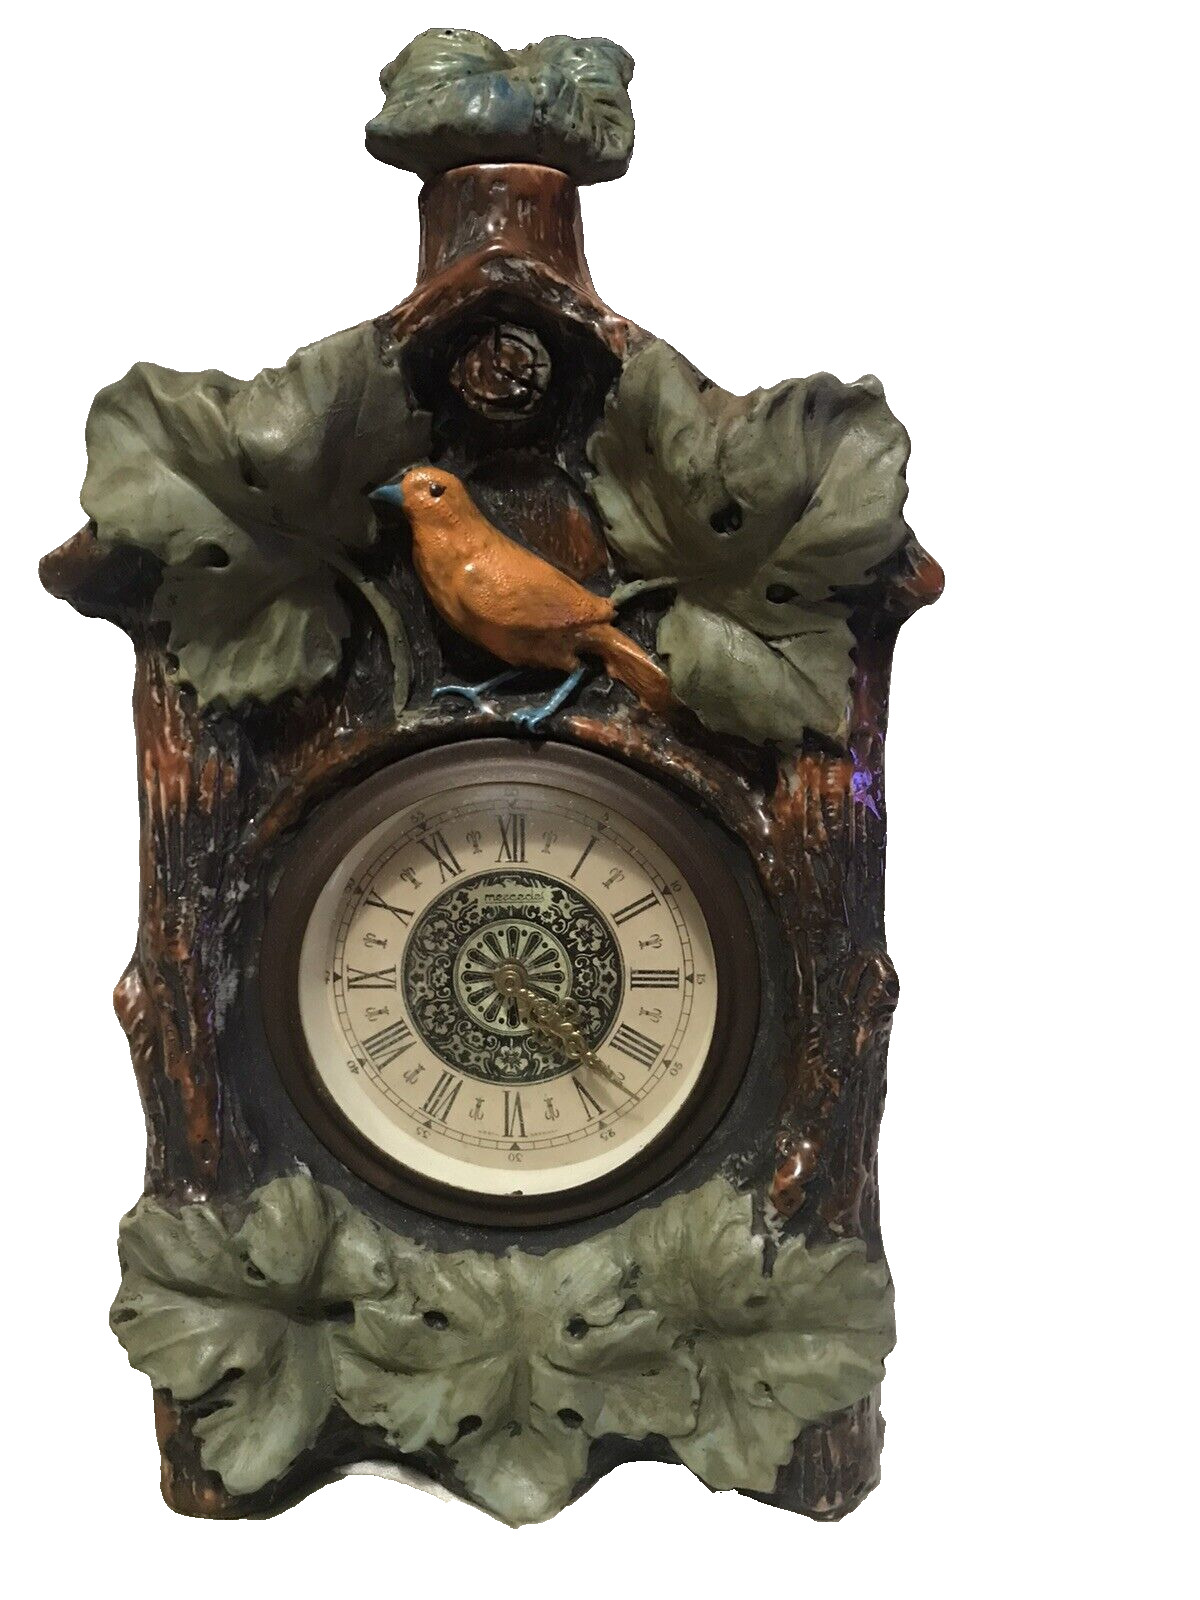 Creative World Cuckoo Decanter Clock. From Italy #1082